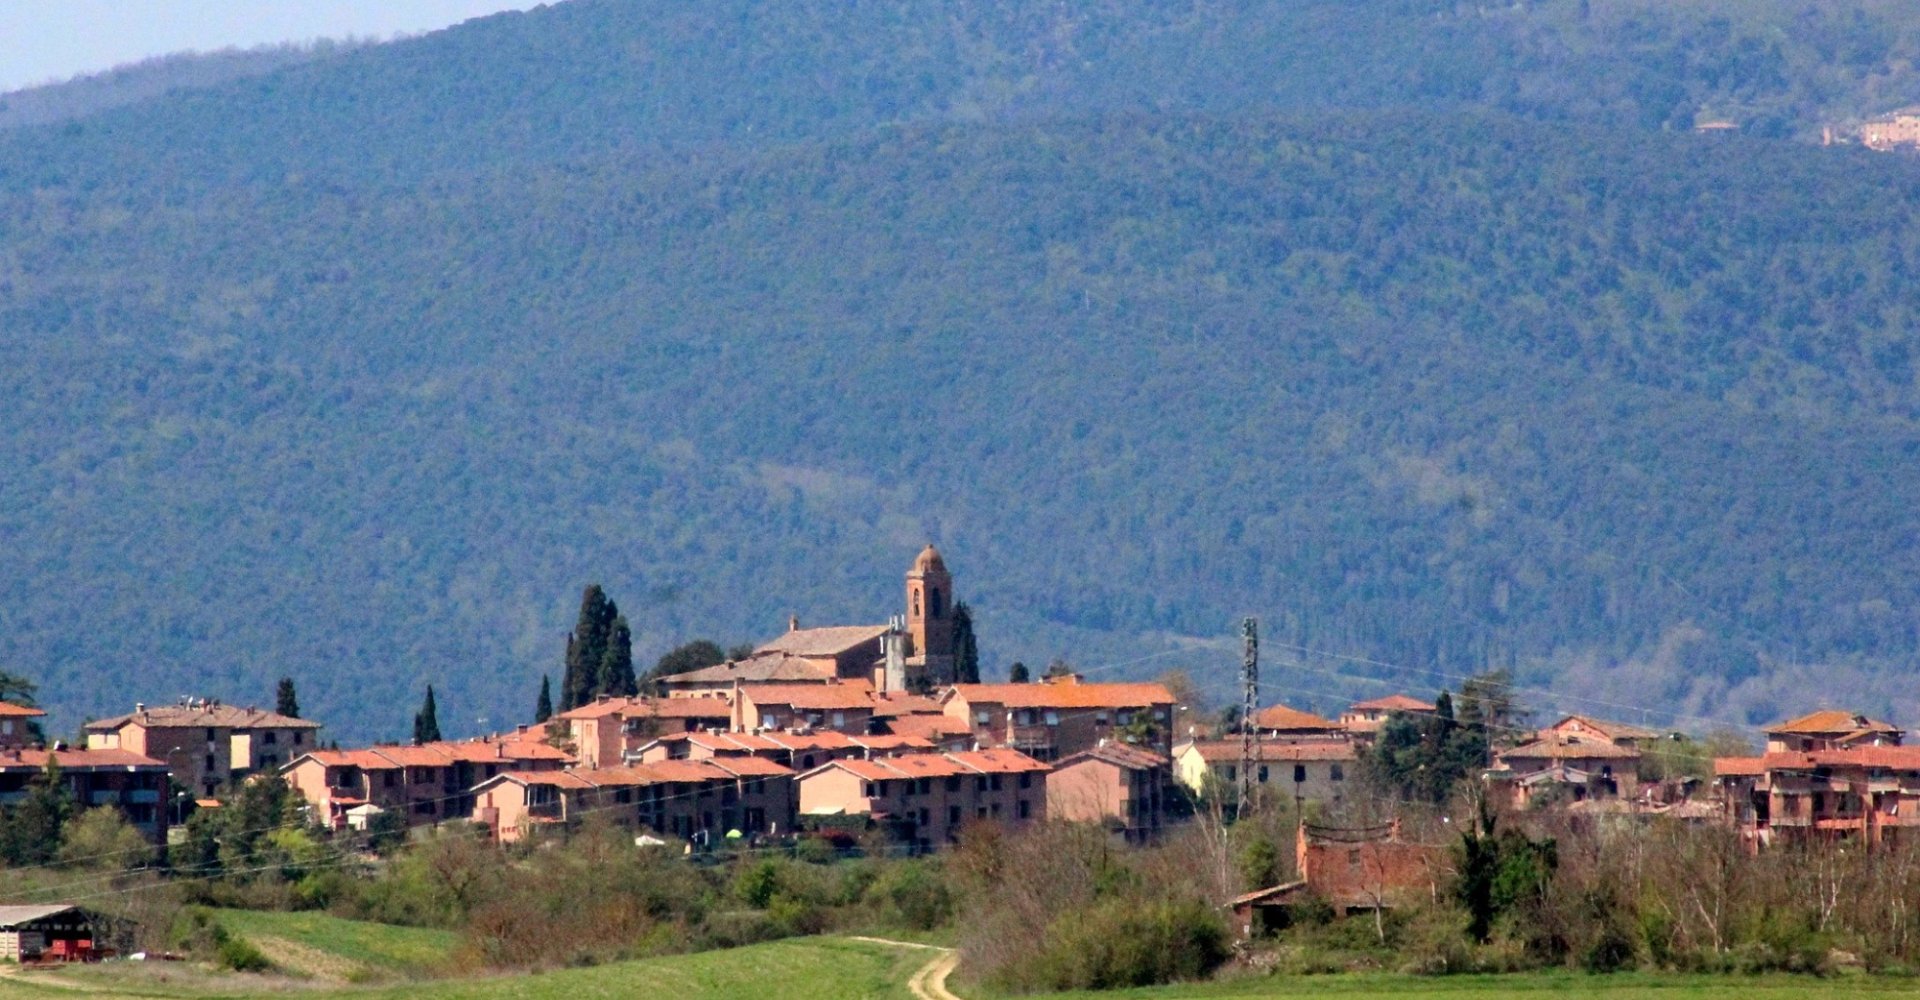 La aldea de San Rocco a Pilli